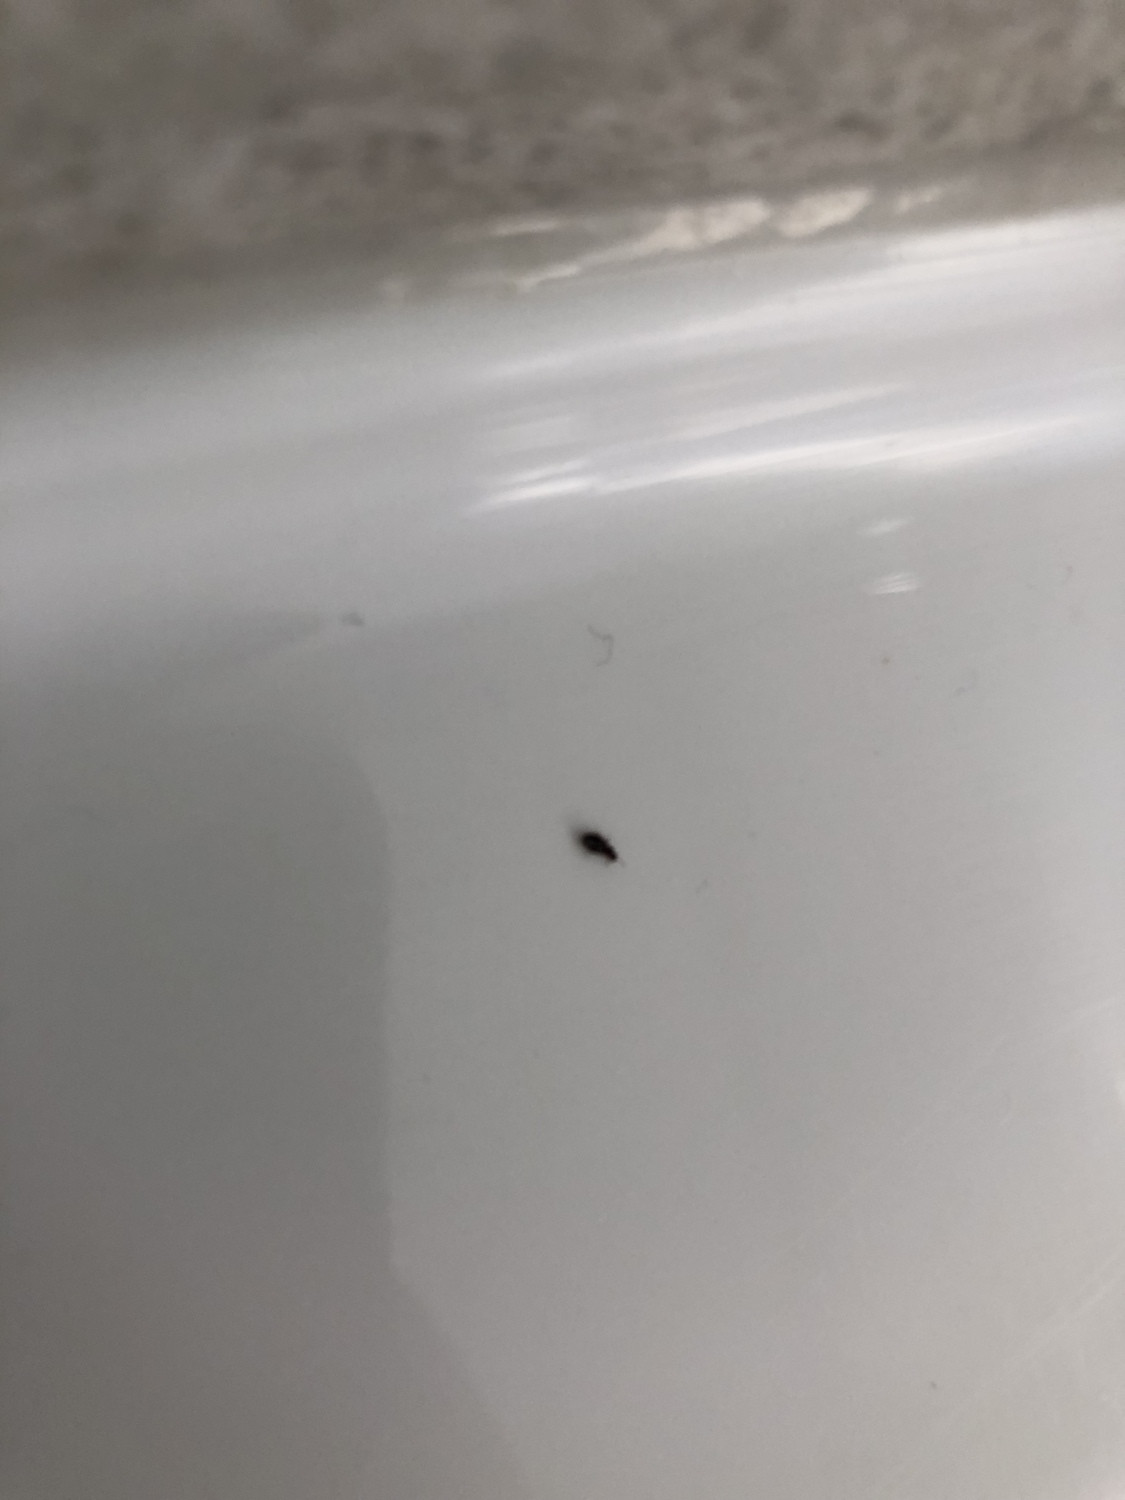 Small Black Bugs In Bathroom Luxury Tiny Bug In Bathroom Ask An Expert Of Small Black Bugs In Bathroom 